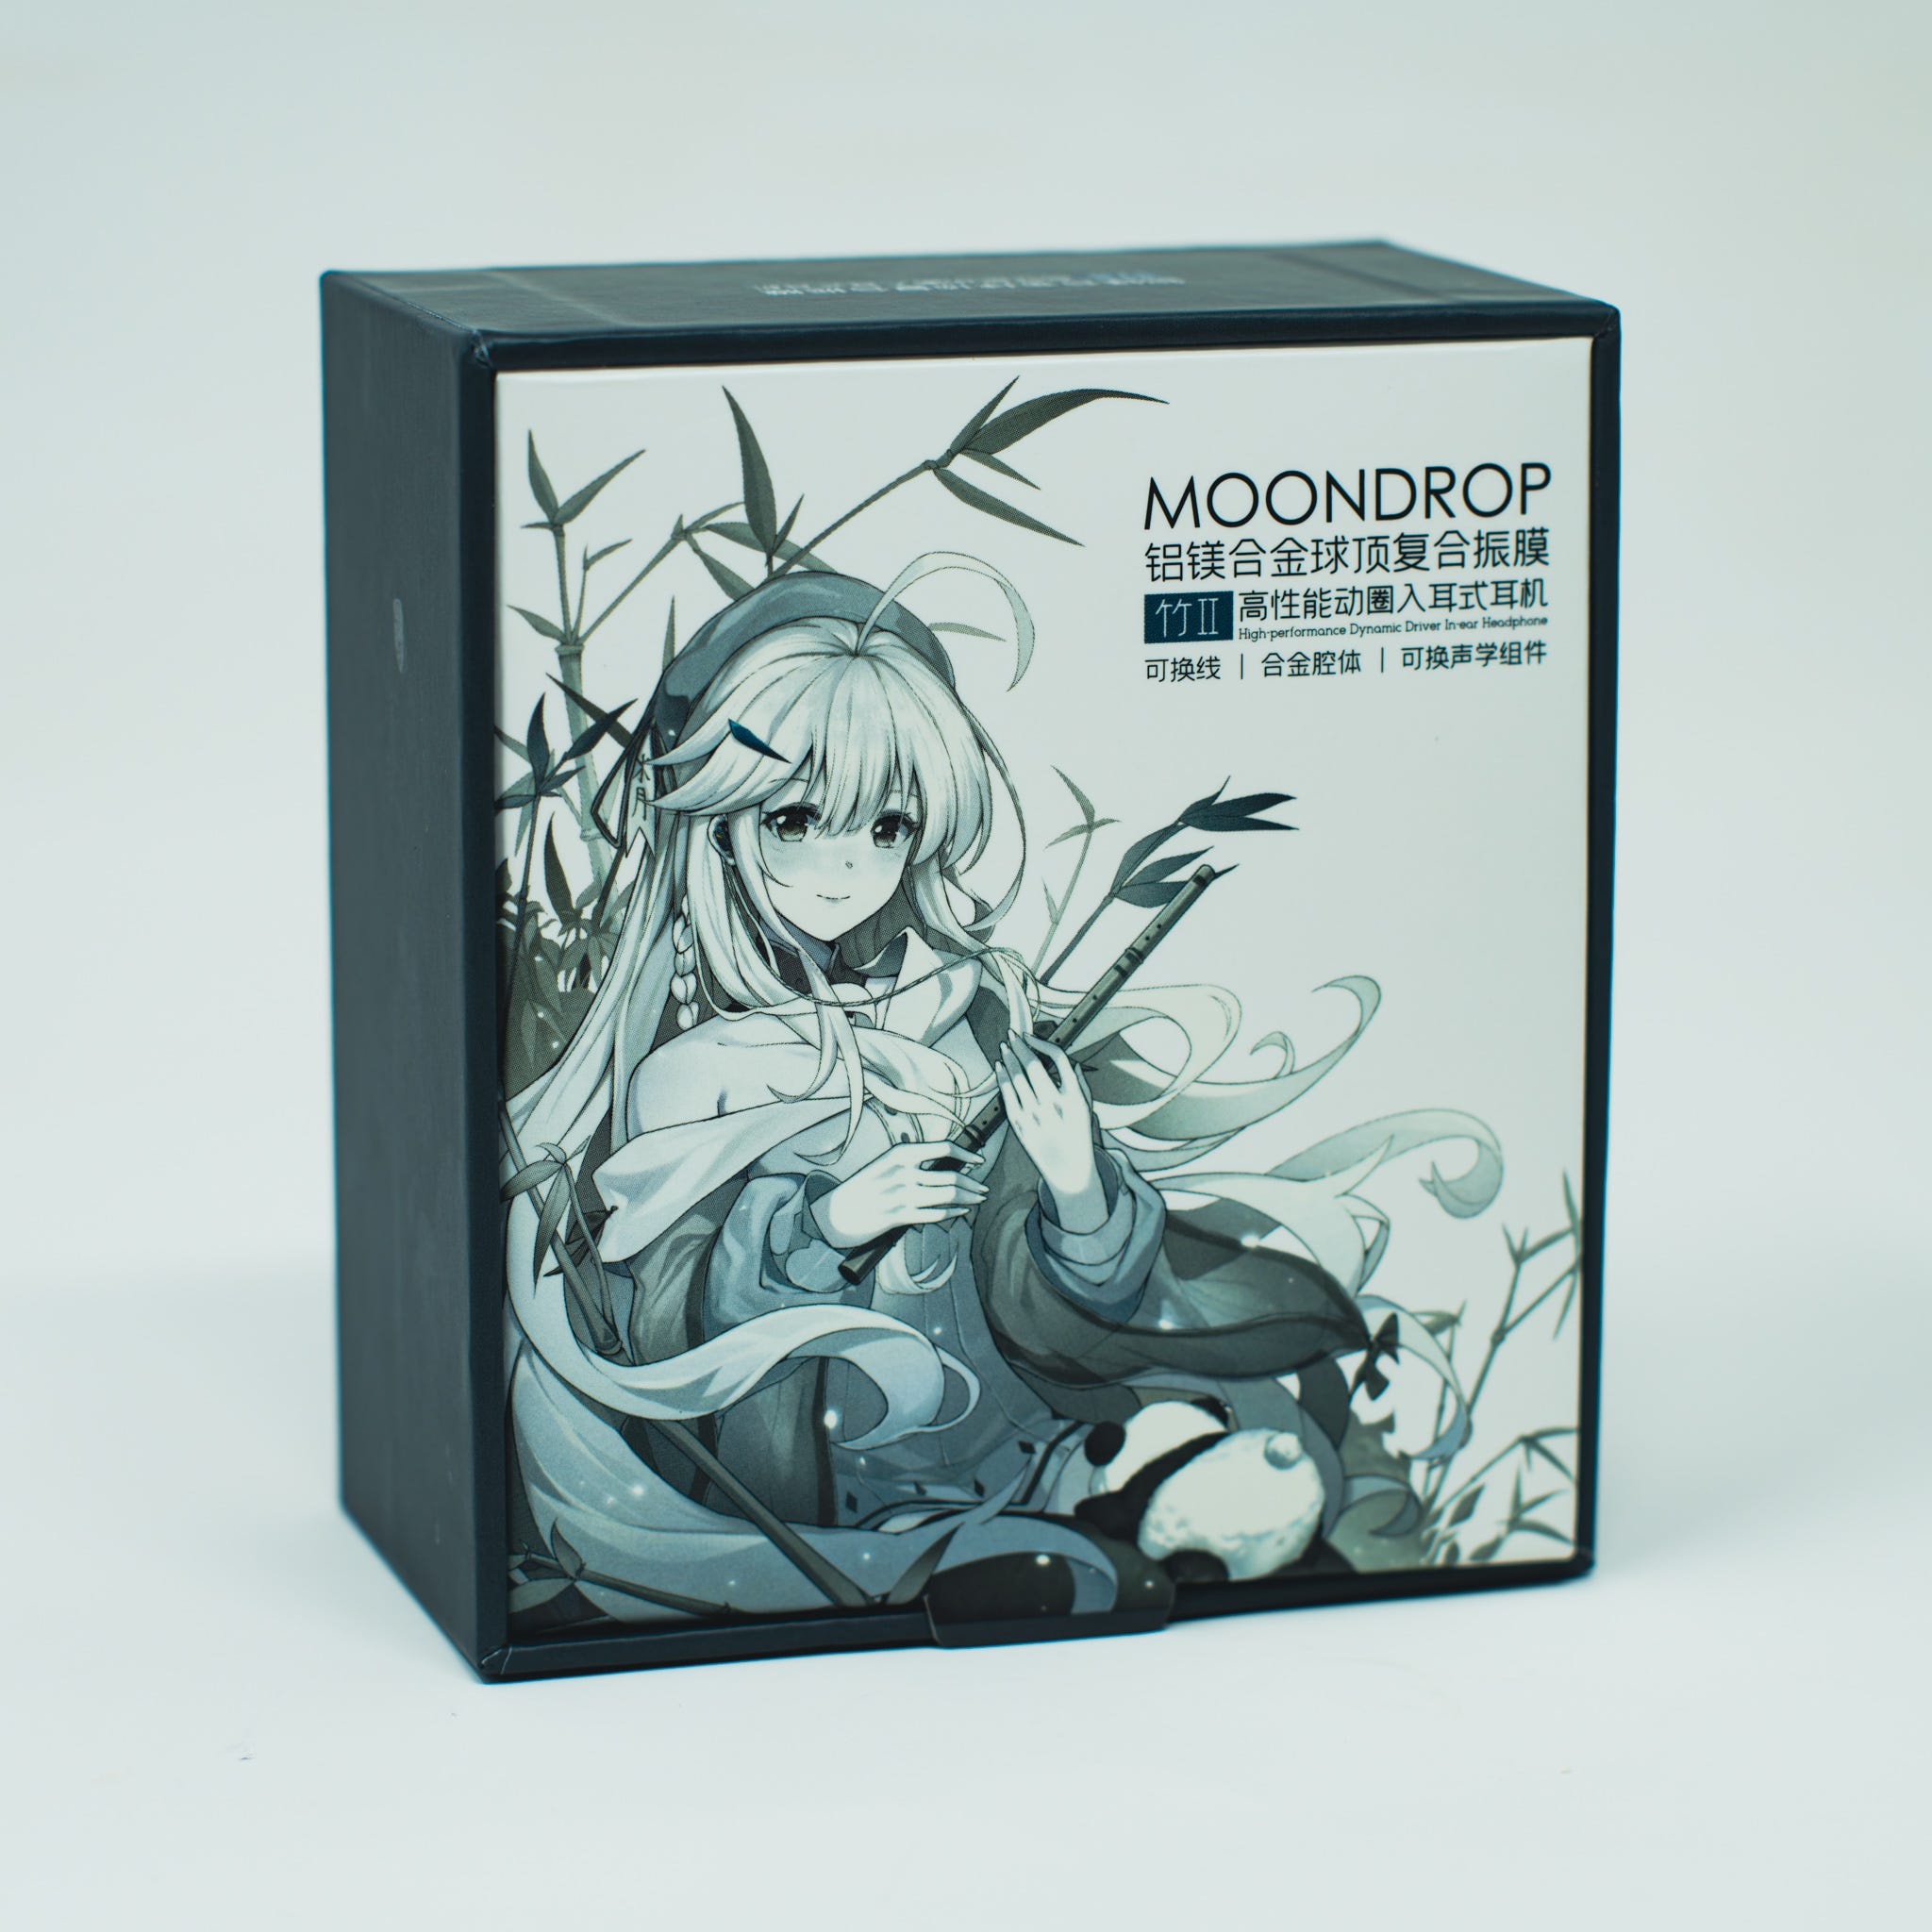 Moondrop Chu II Review - Prime Audio Reviews